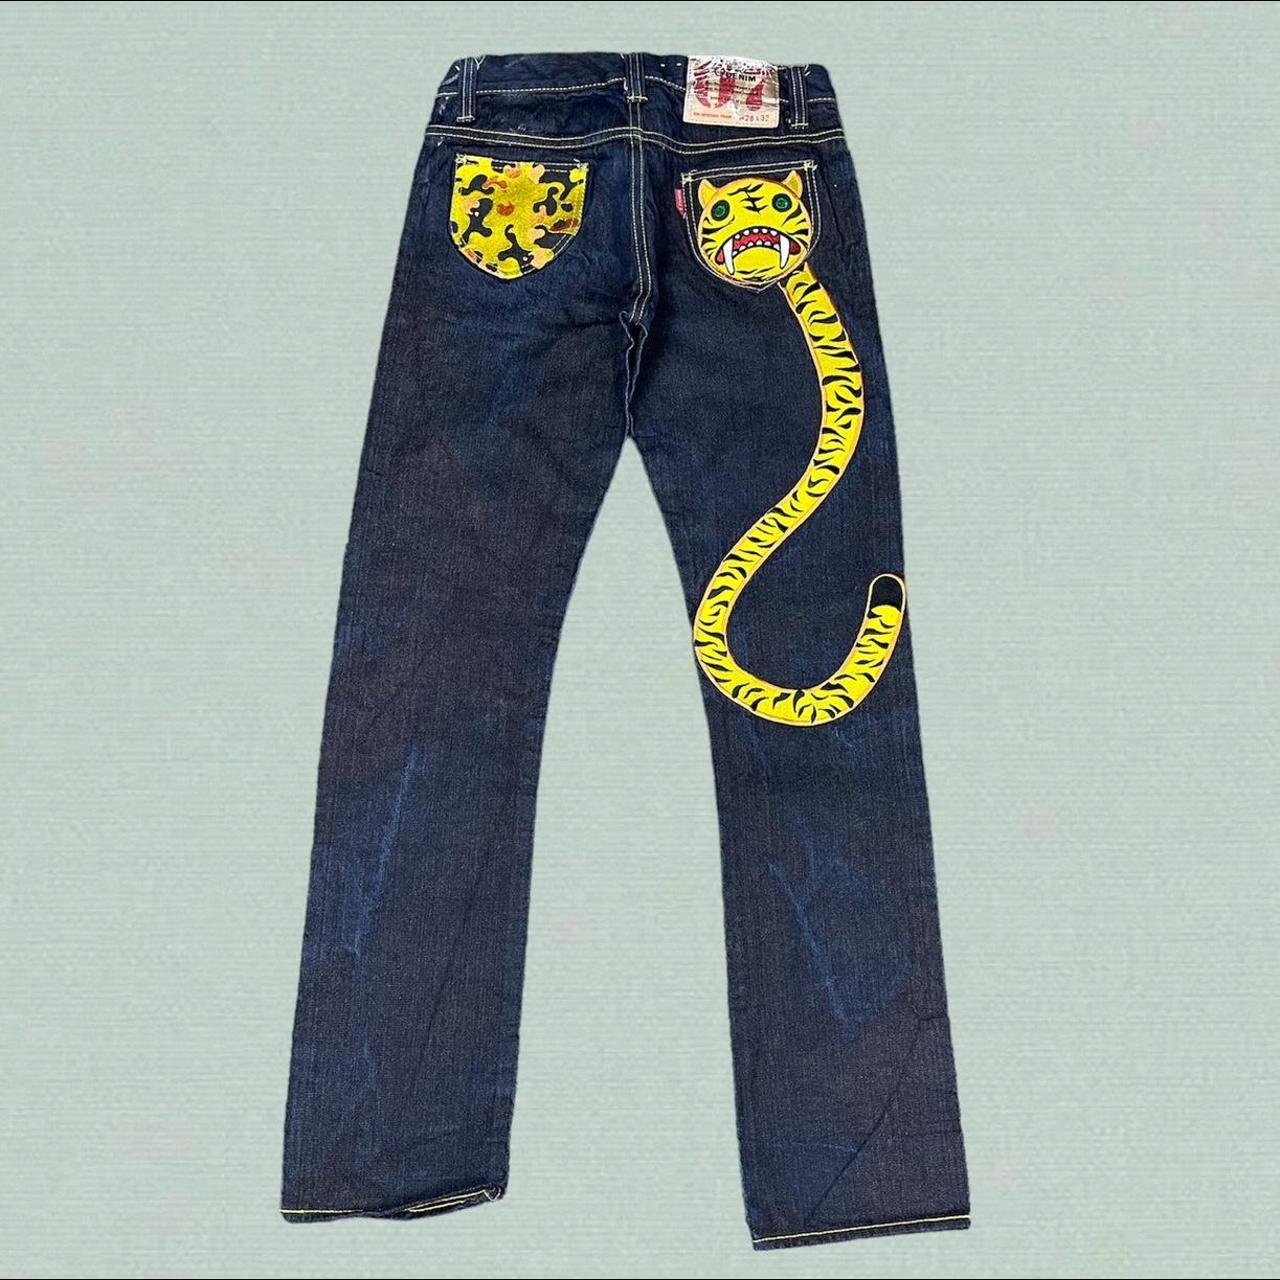 Discover The Best Japanese Denim Brands! #3 - Momotaro Jeans - YouTube